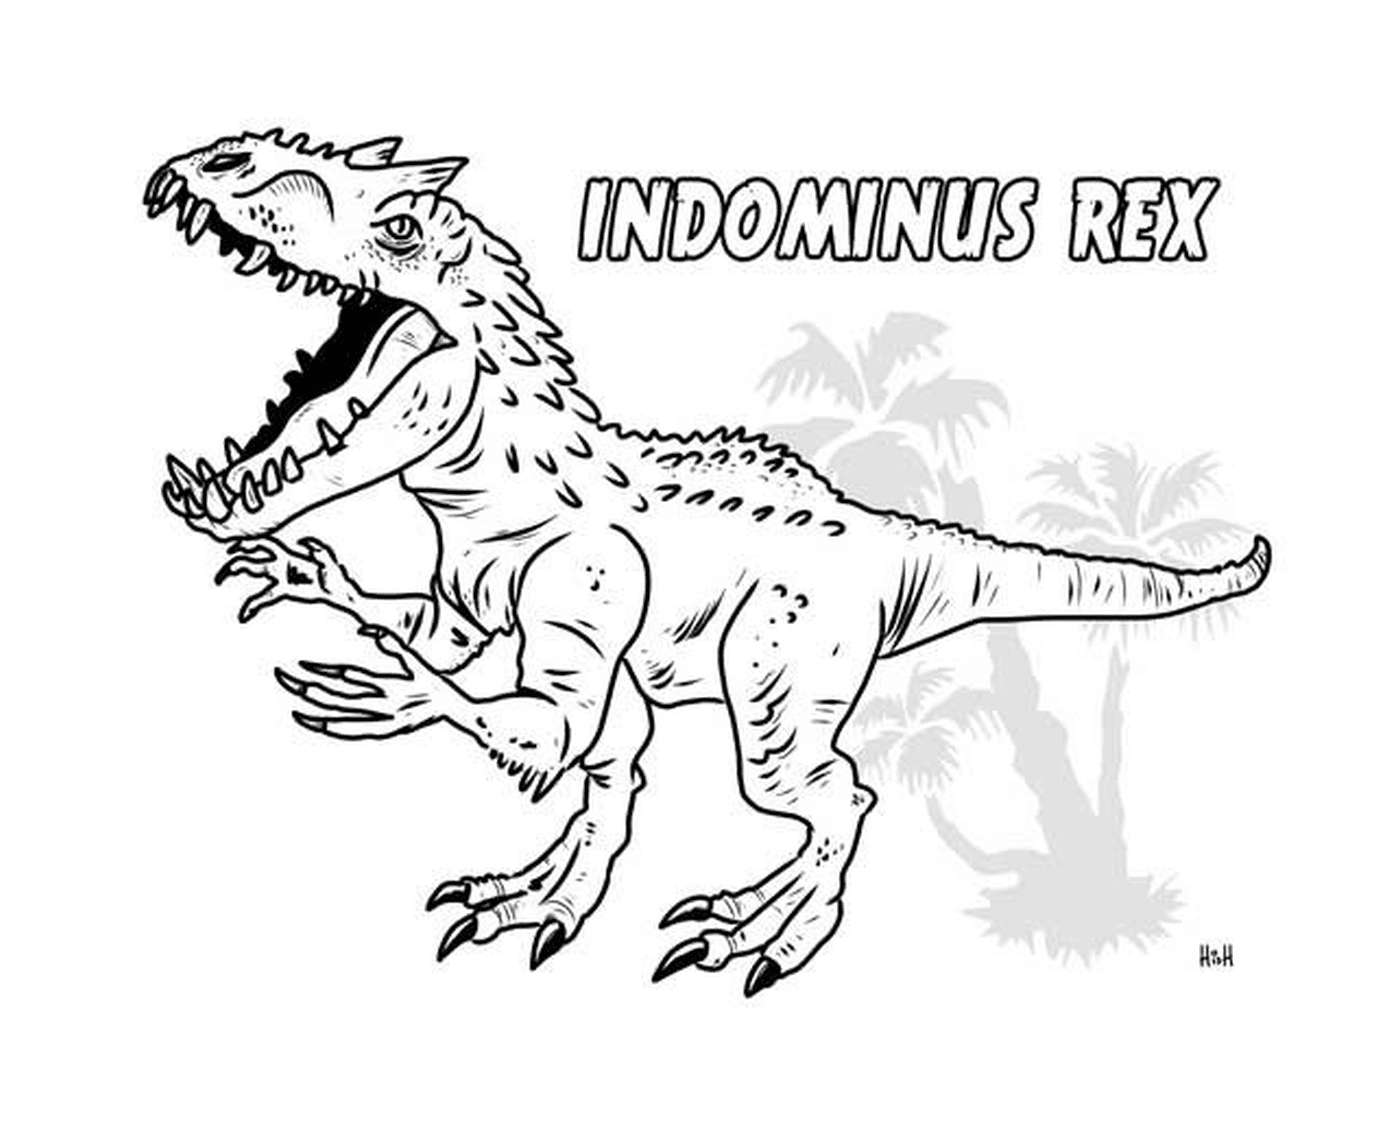  Indominus Rex, mundo jurássico perigoso 